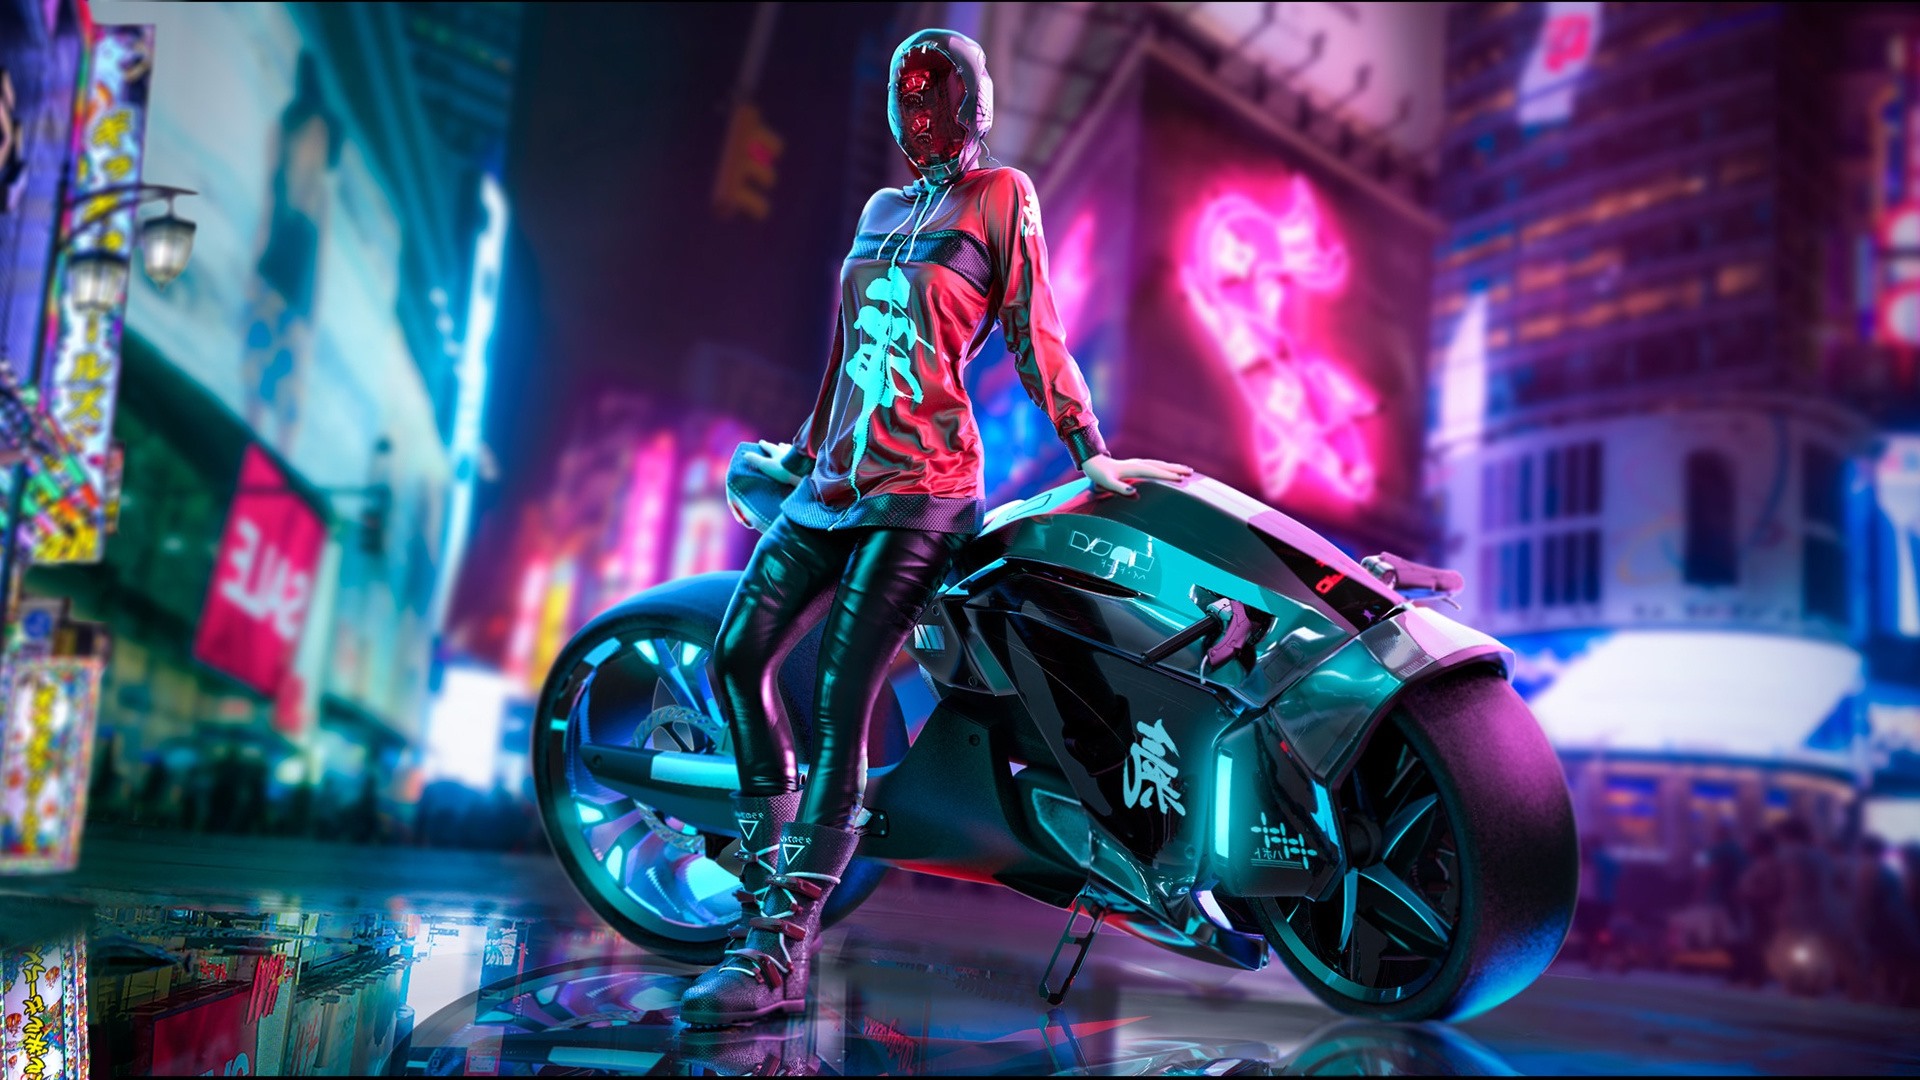 Wallpaper Cyberpunk city, girl, motorcycle 1920x1080 Full HD 2K Picture, Image